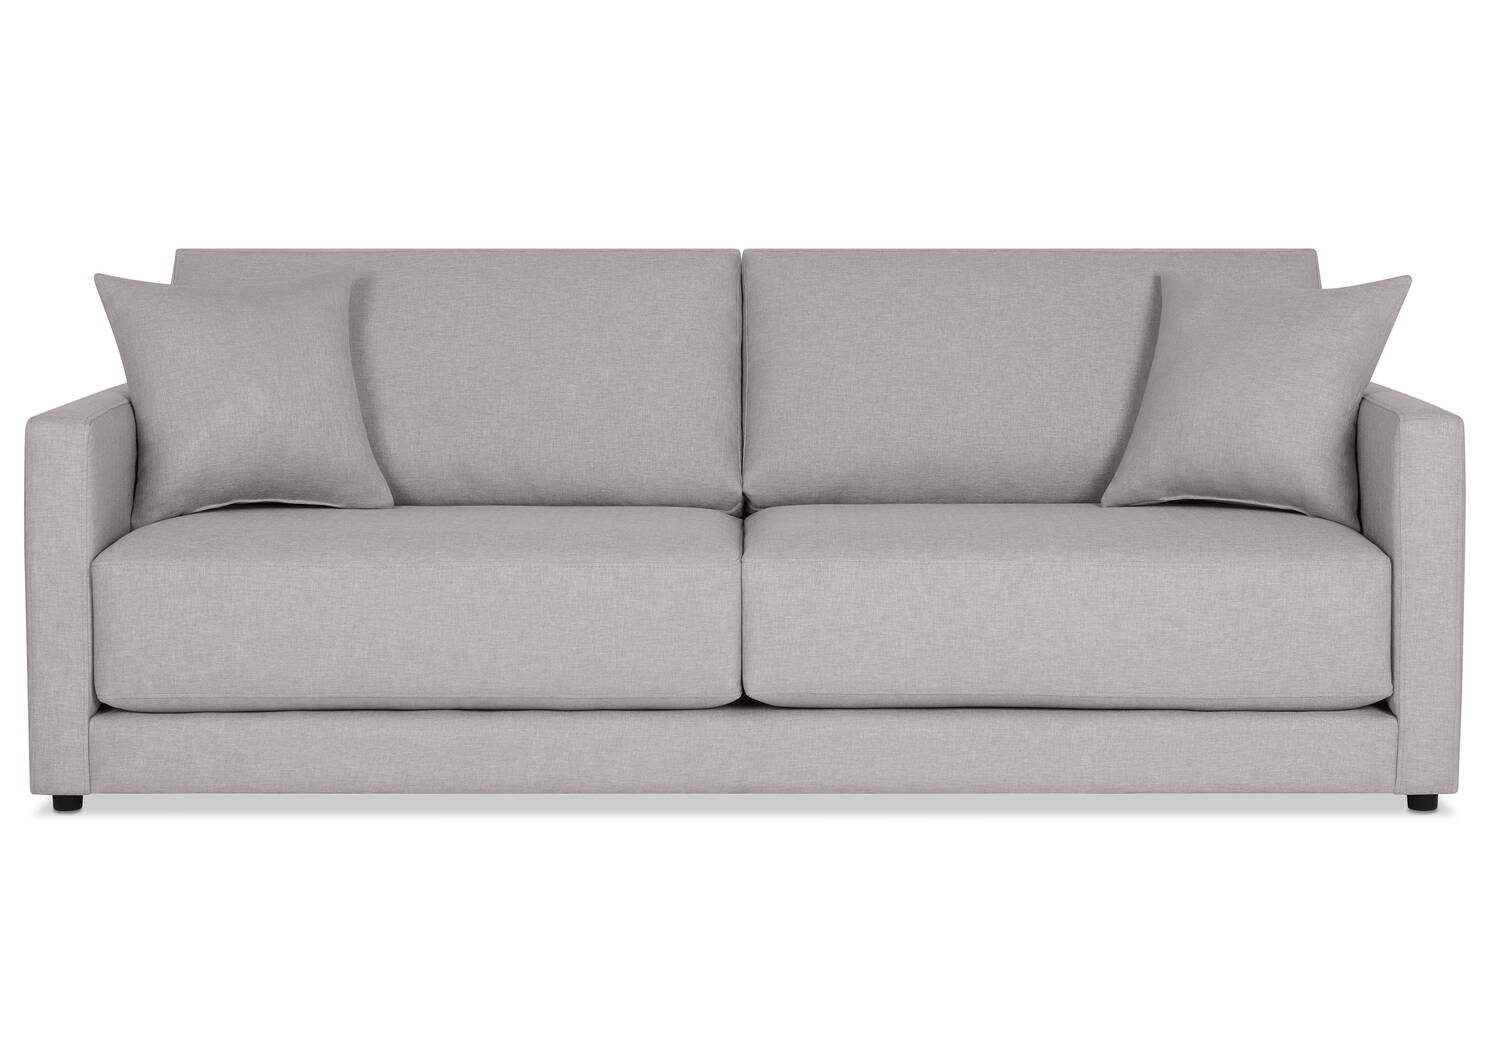 Adley Custom Sofa